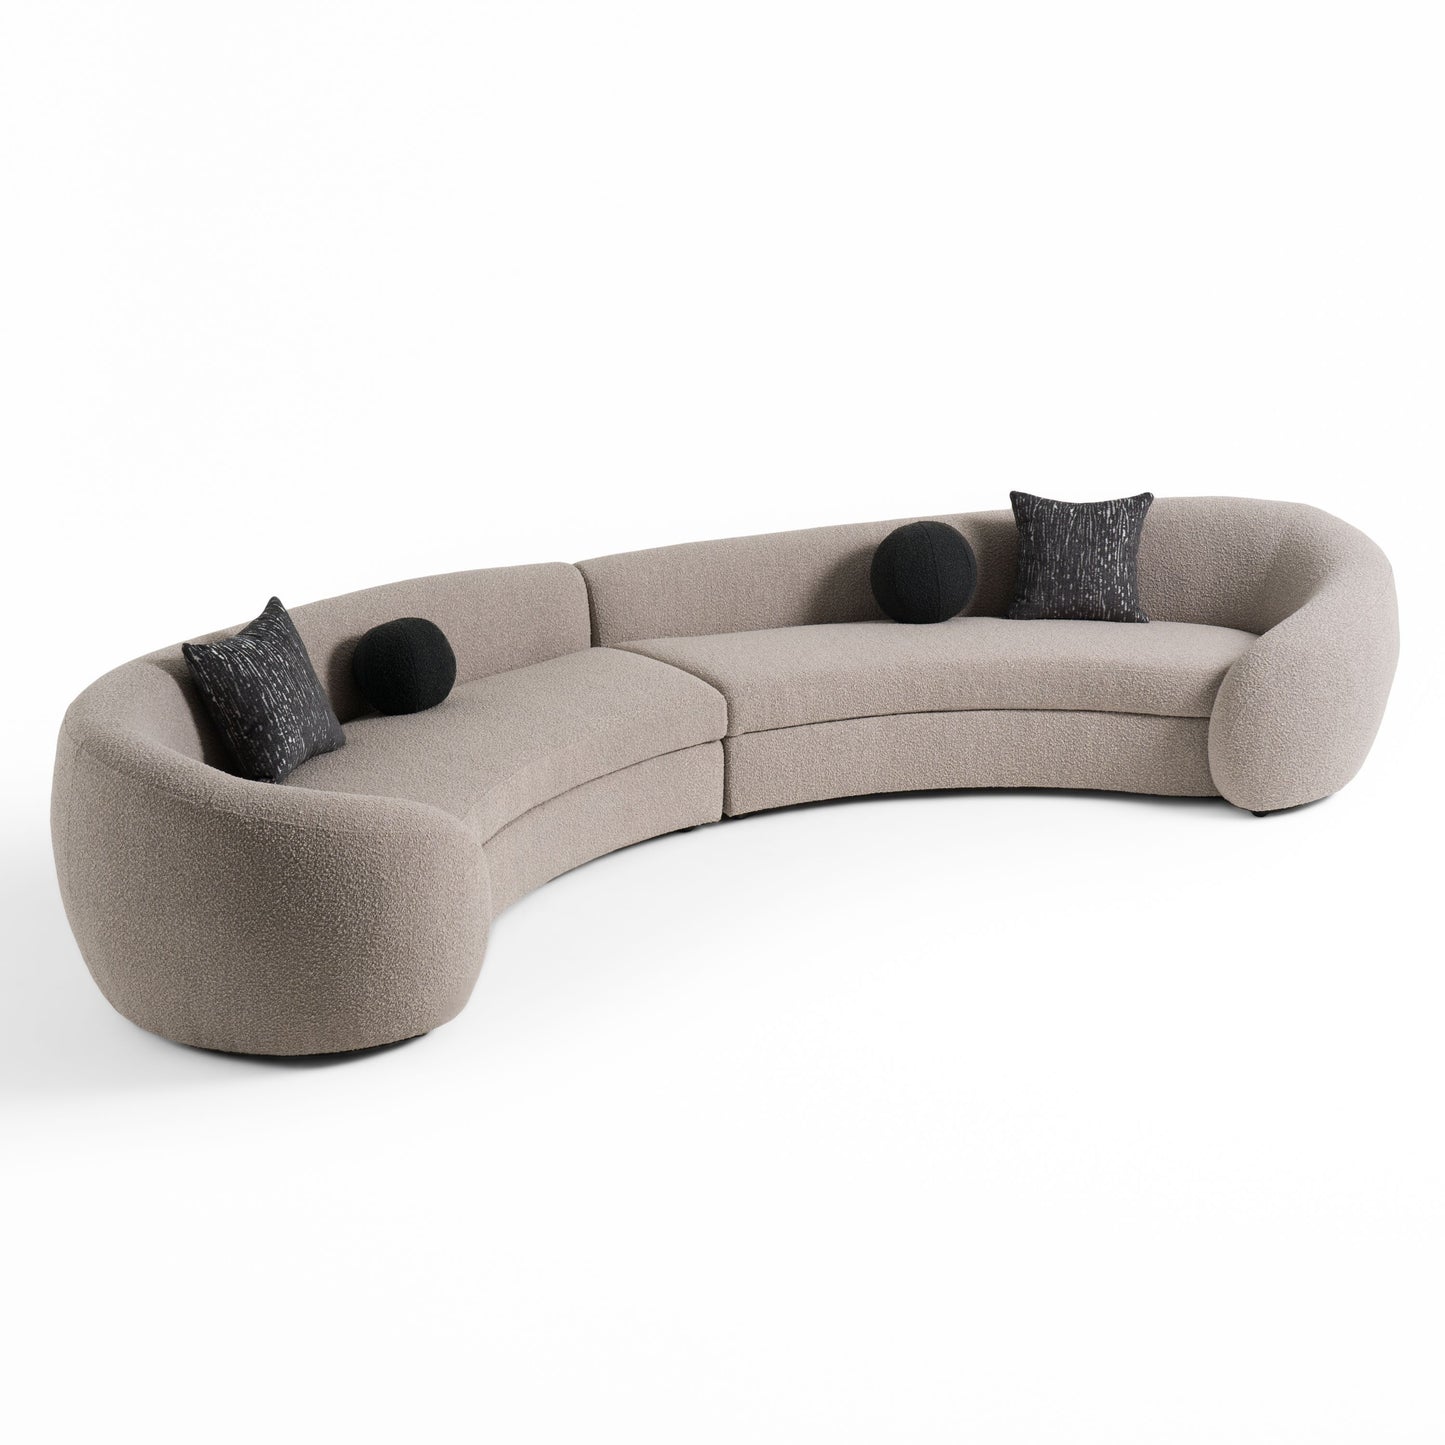 Modrest - Kilmer Modern Grey Curved Fabric Sectional Sofa